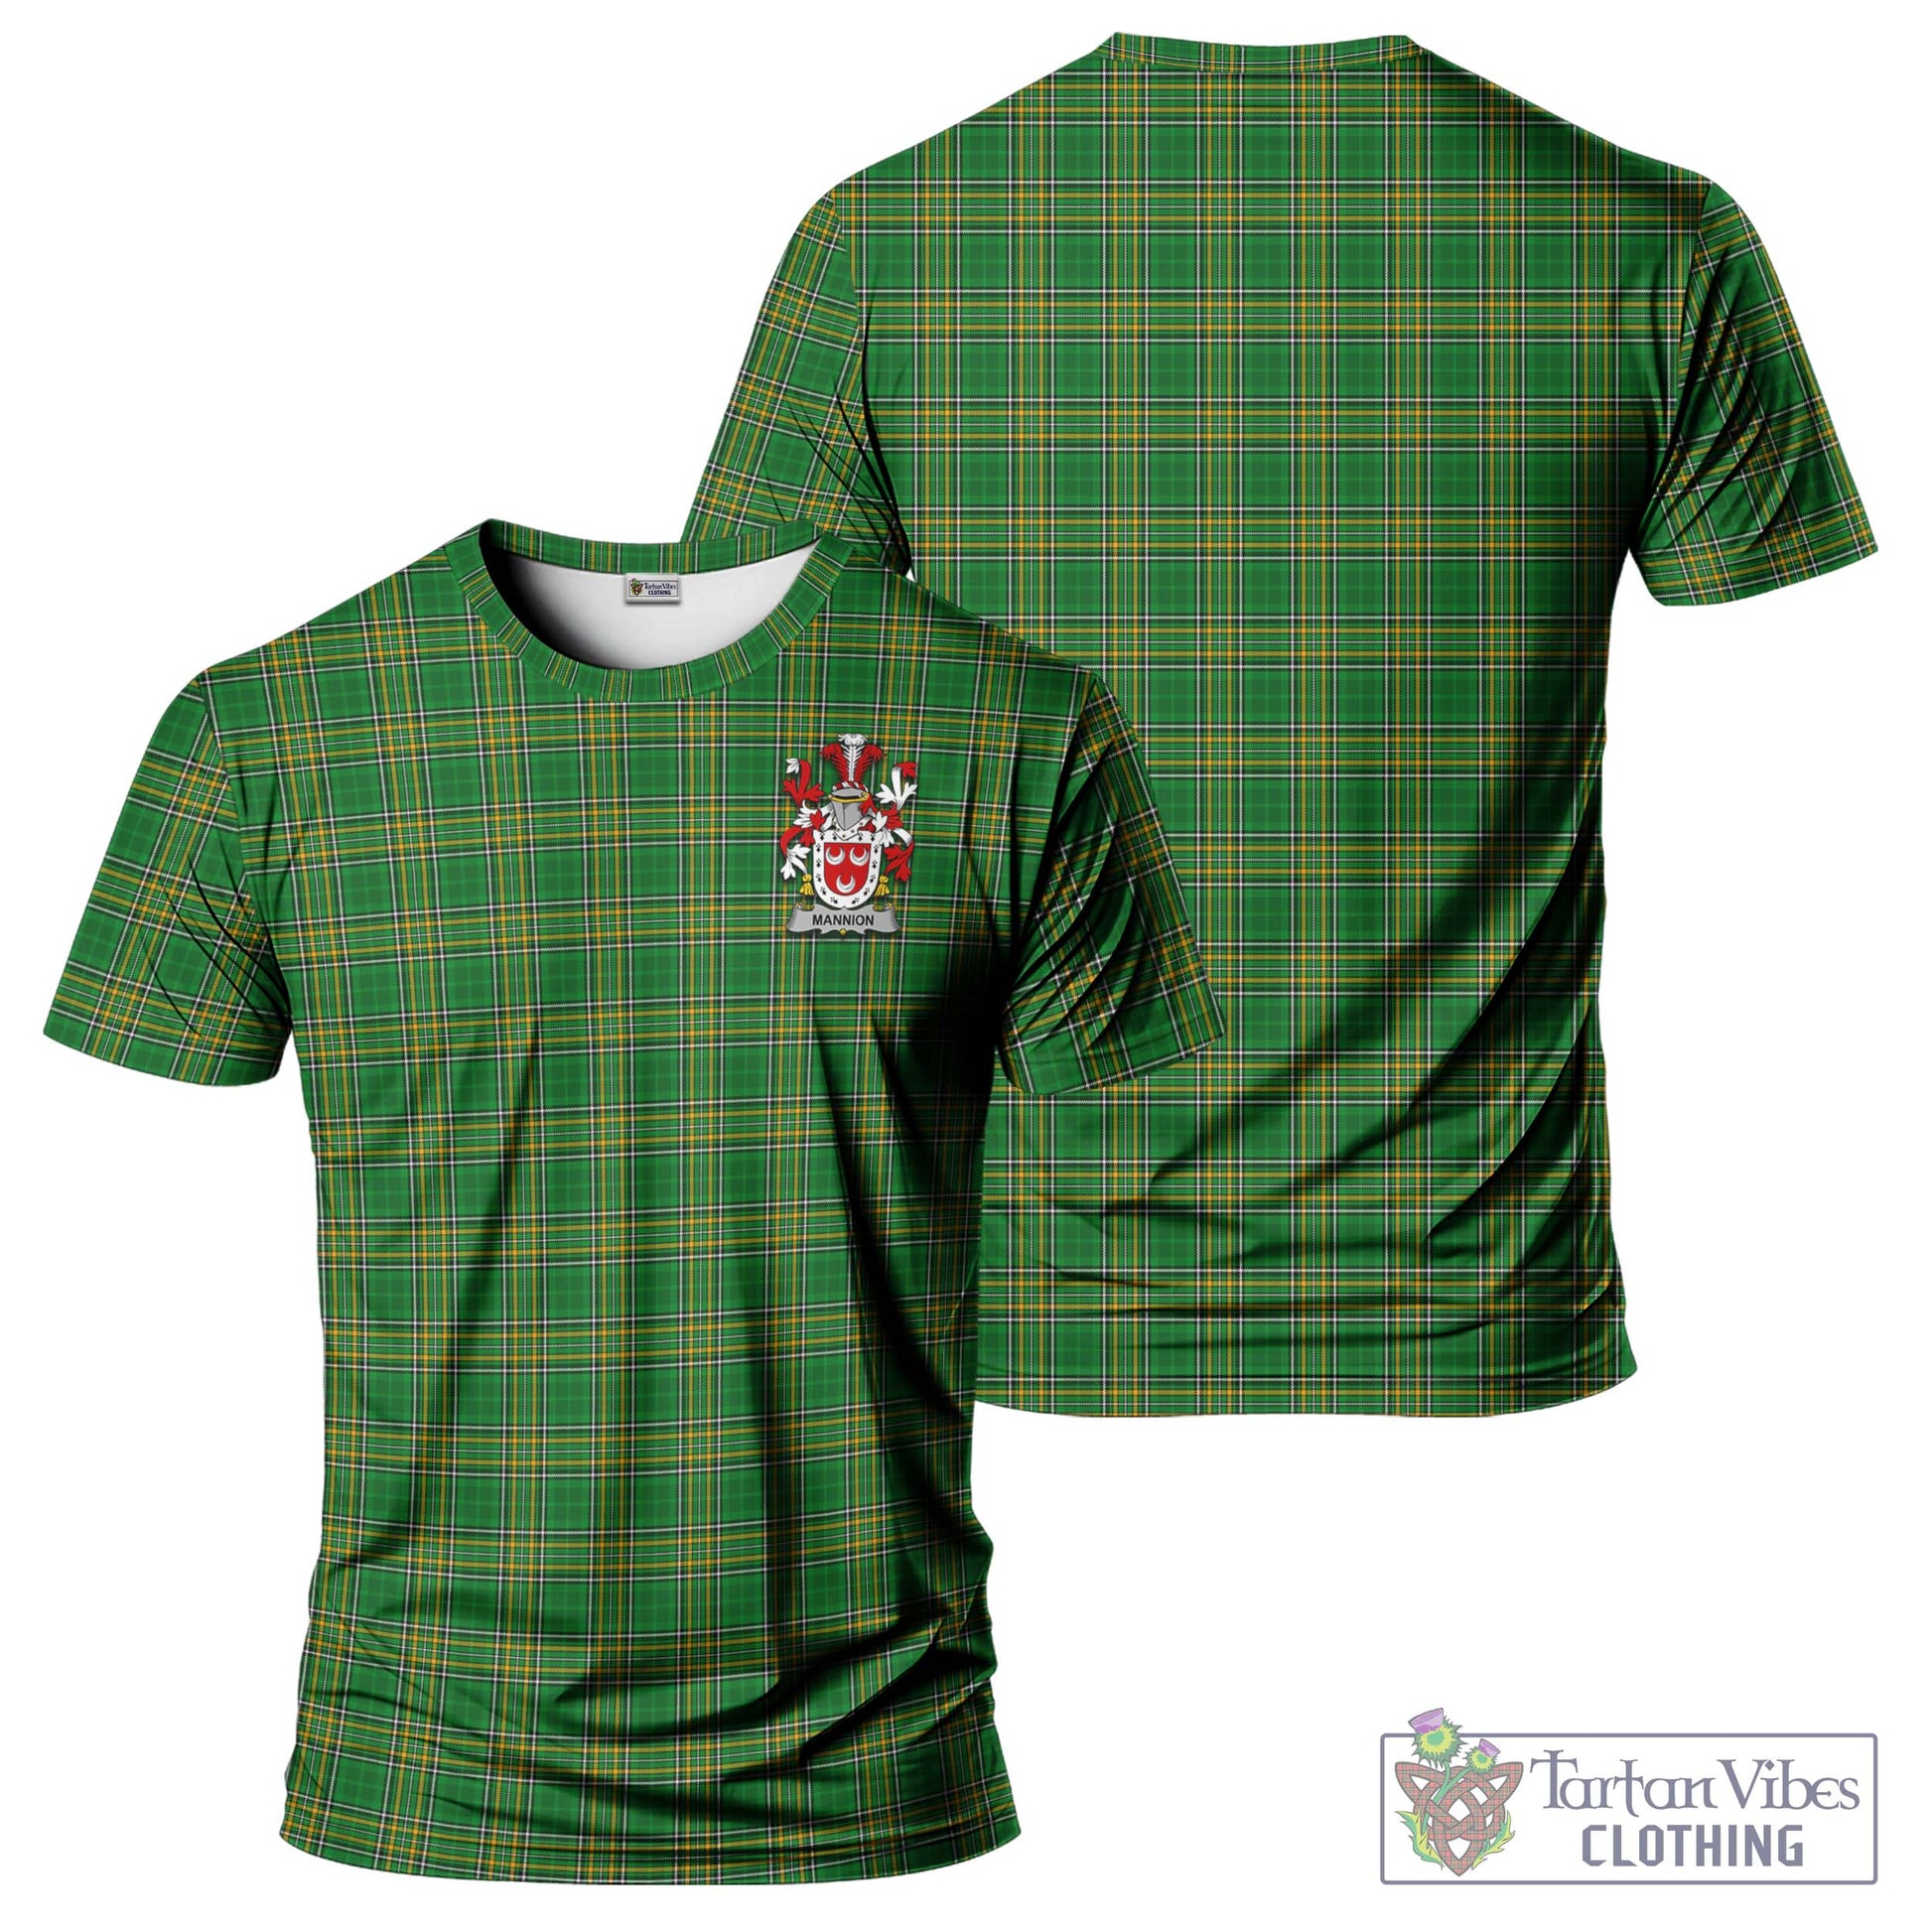 Tartan Vibes Clothing Mannion Ireland Clan Tartan T-Shirt with Family Seal